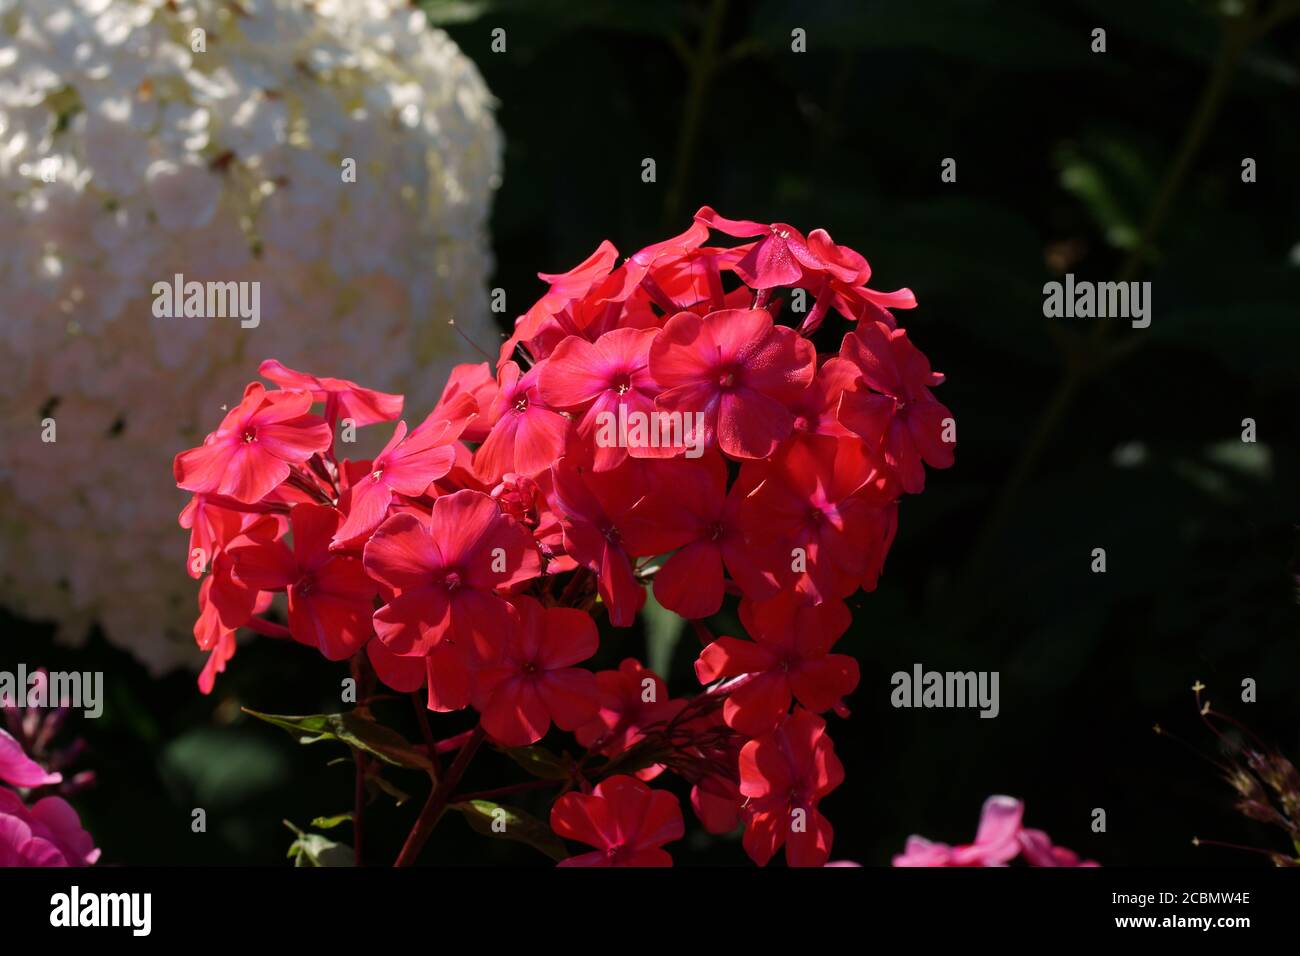 Red flowers. Phlox paniculata, fall phlox, garden phlox, perennial phlox or summer phlox Stock Photo